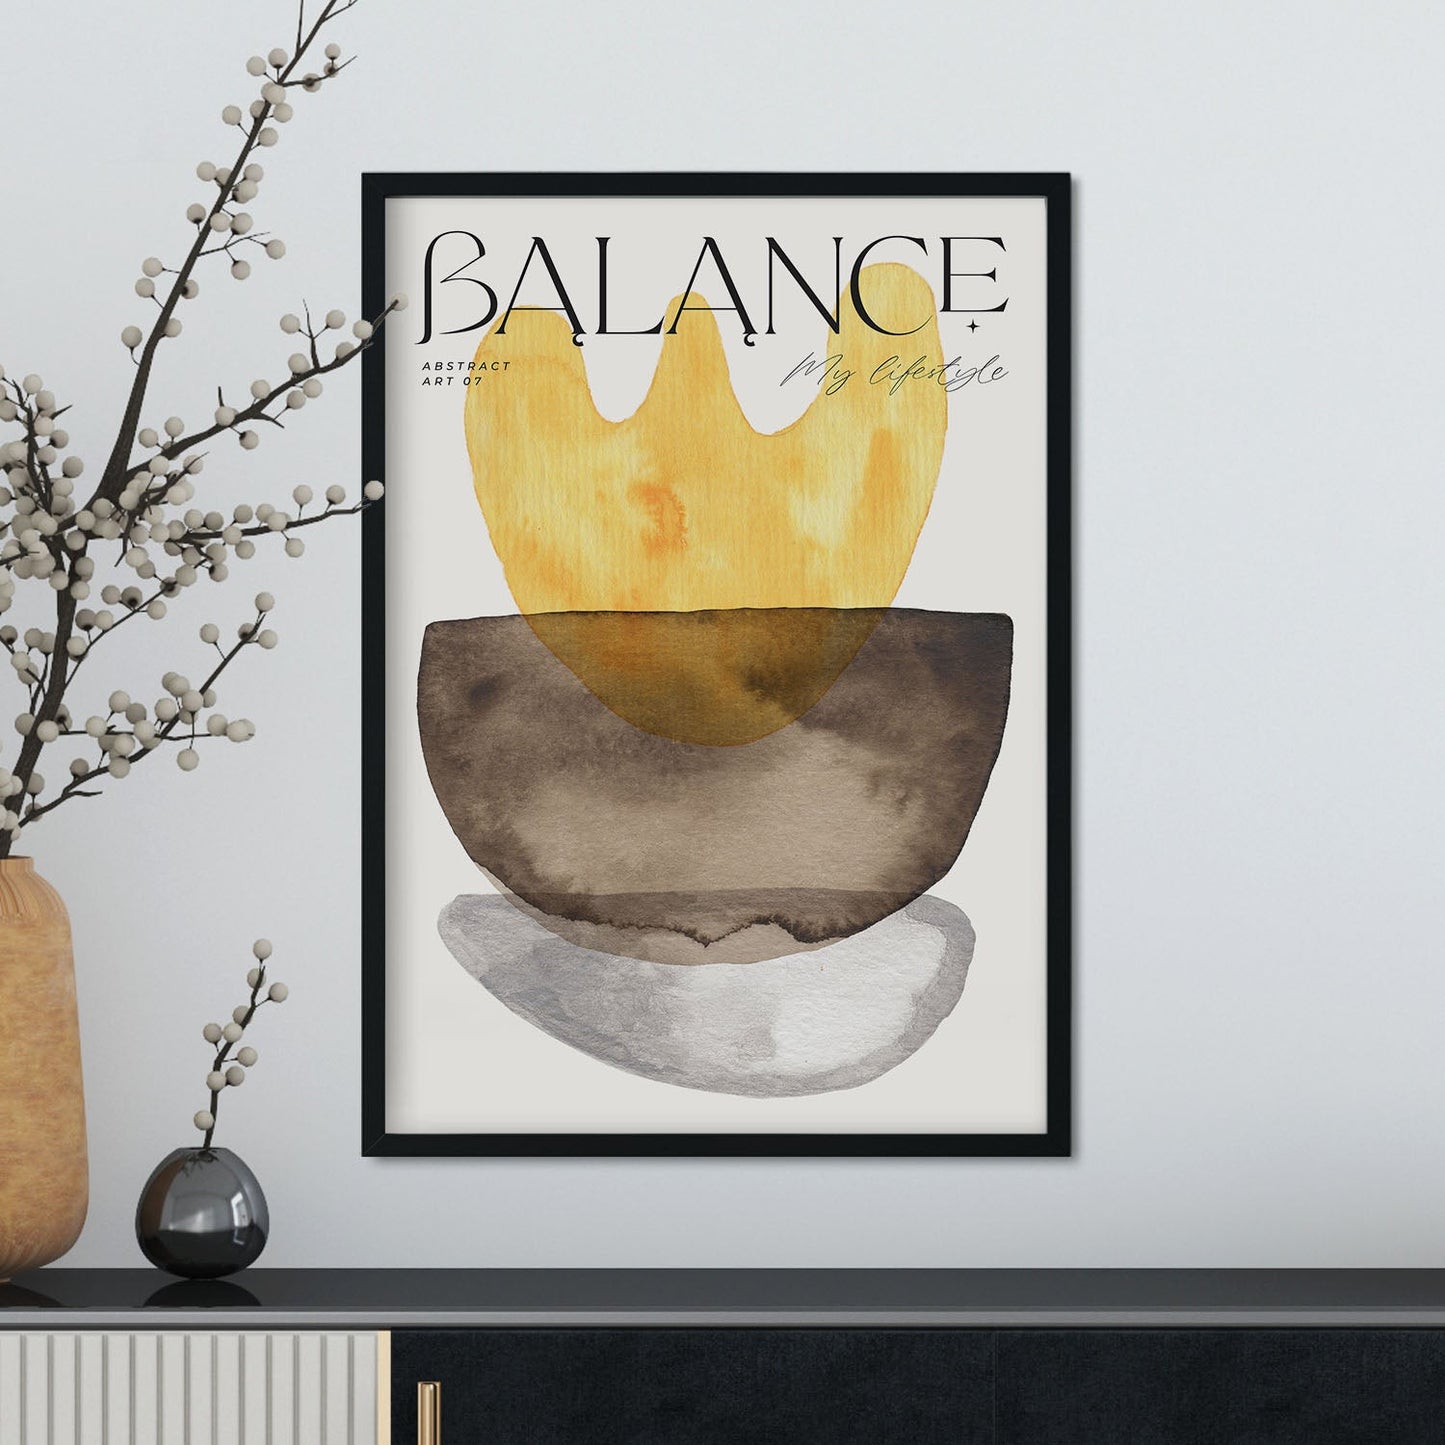 Balance-Artwork-Nacnic-Nacnic Estudio SL